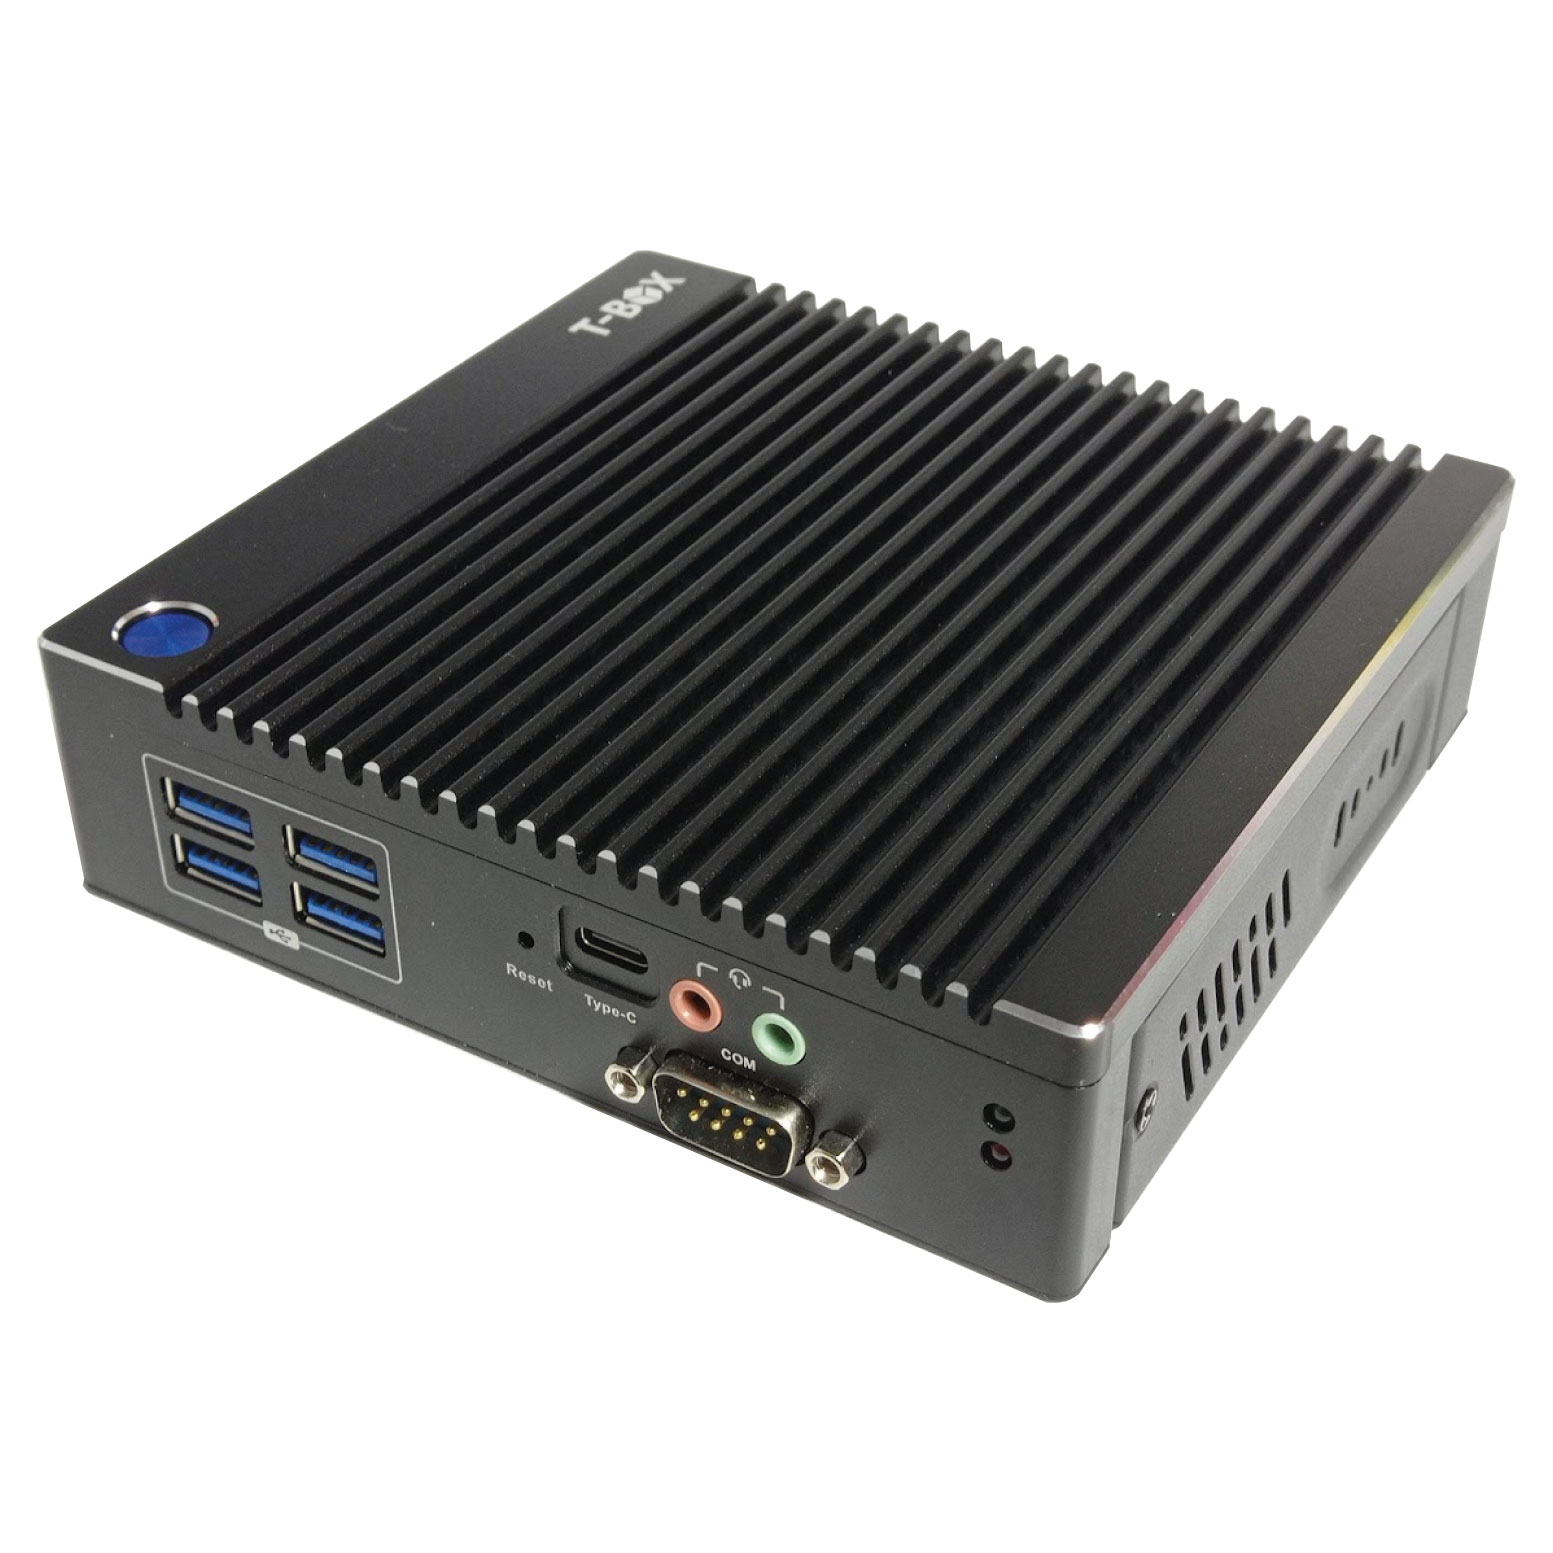 BOX-INDN31 Mini PC Celeron 8GB, SSD 512GB, No Wifi, Win 10Pro, 2LAN, 6USB, 1TypeC, 2HDMI, 1DP